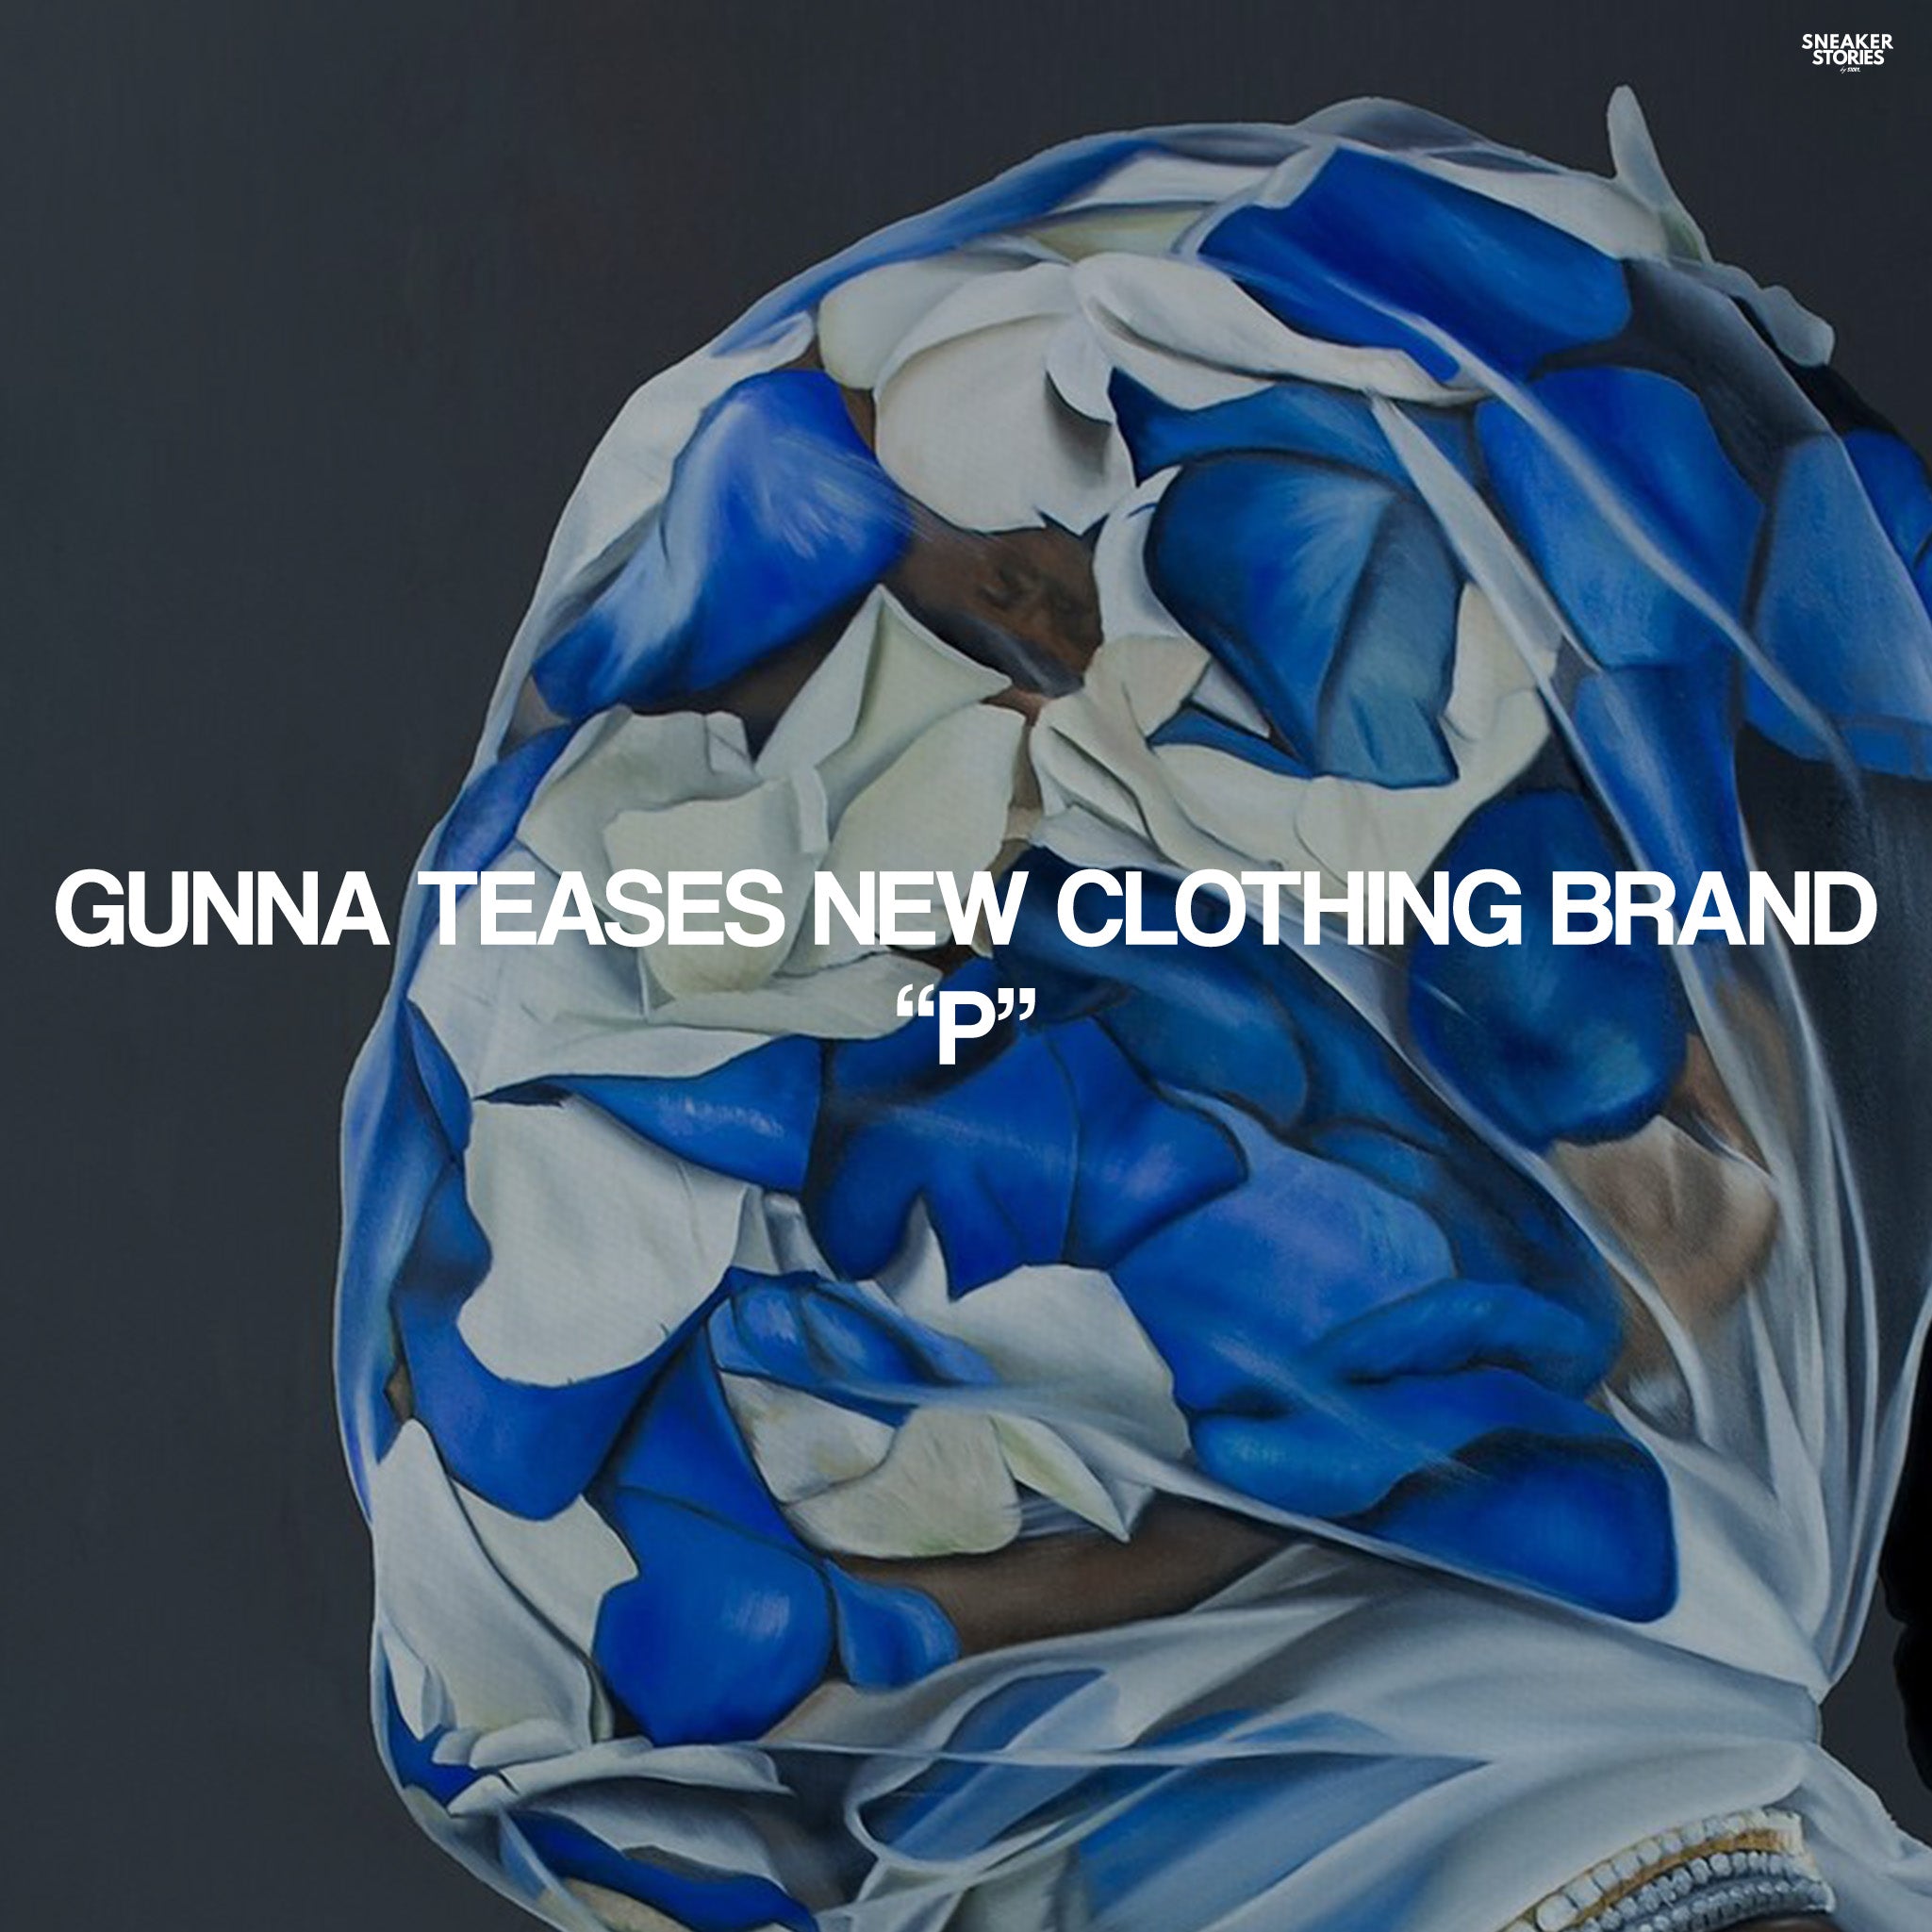 Gunna Teases new clothing brand “P”